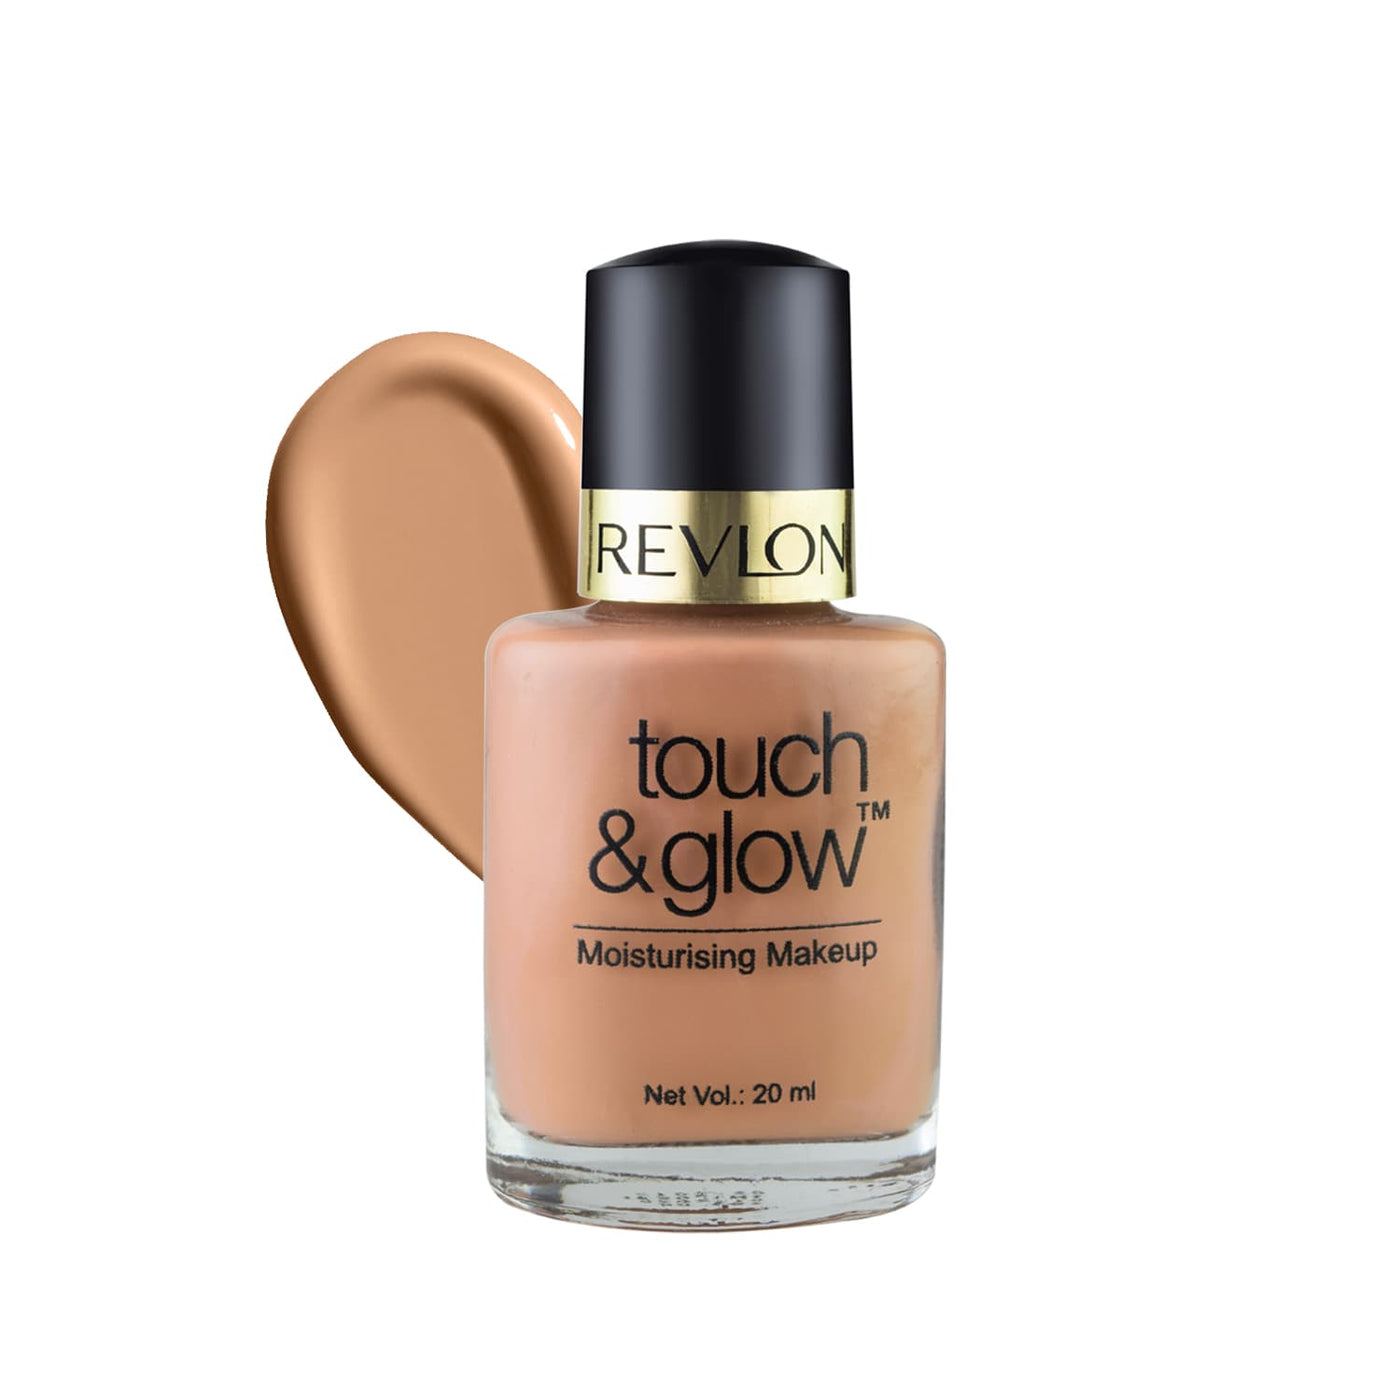 Revlon Touch & Glow Makeup